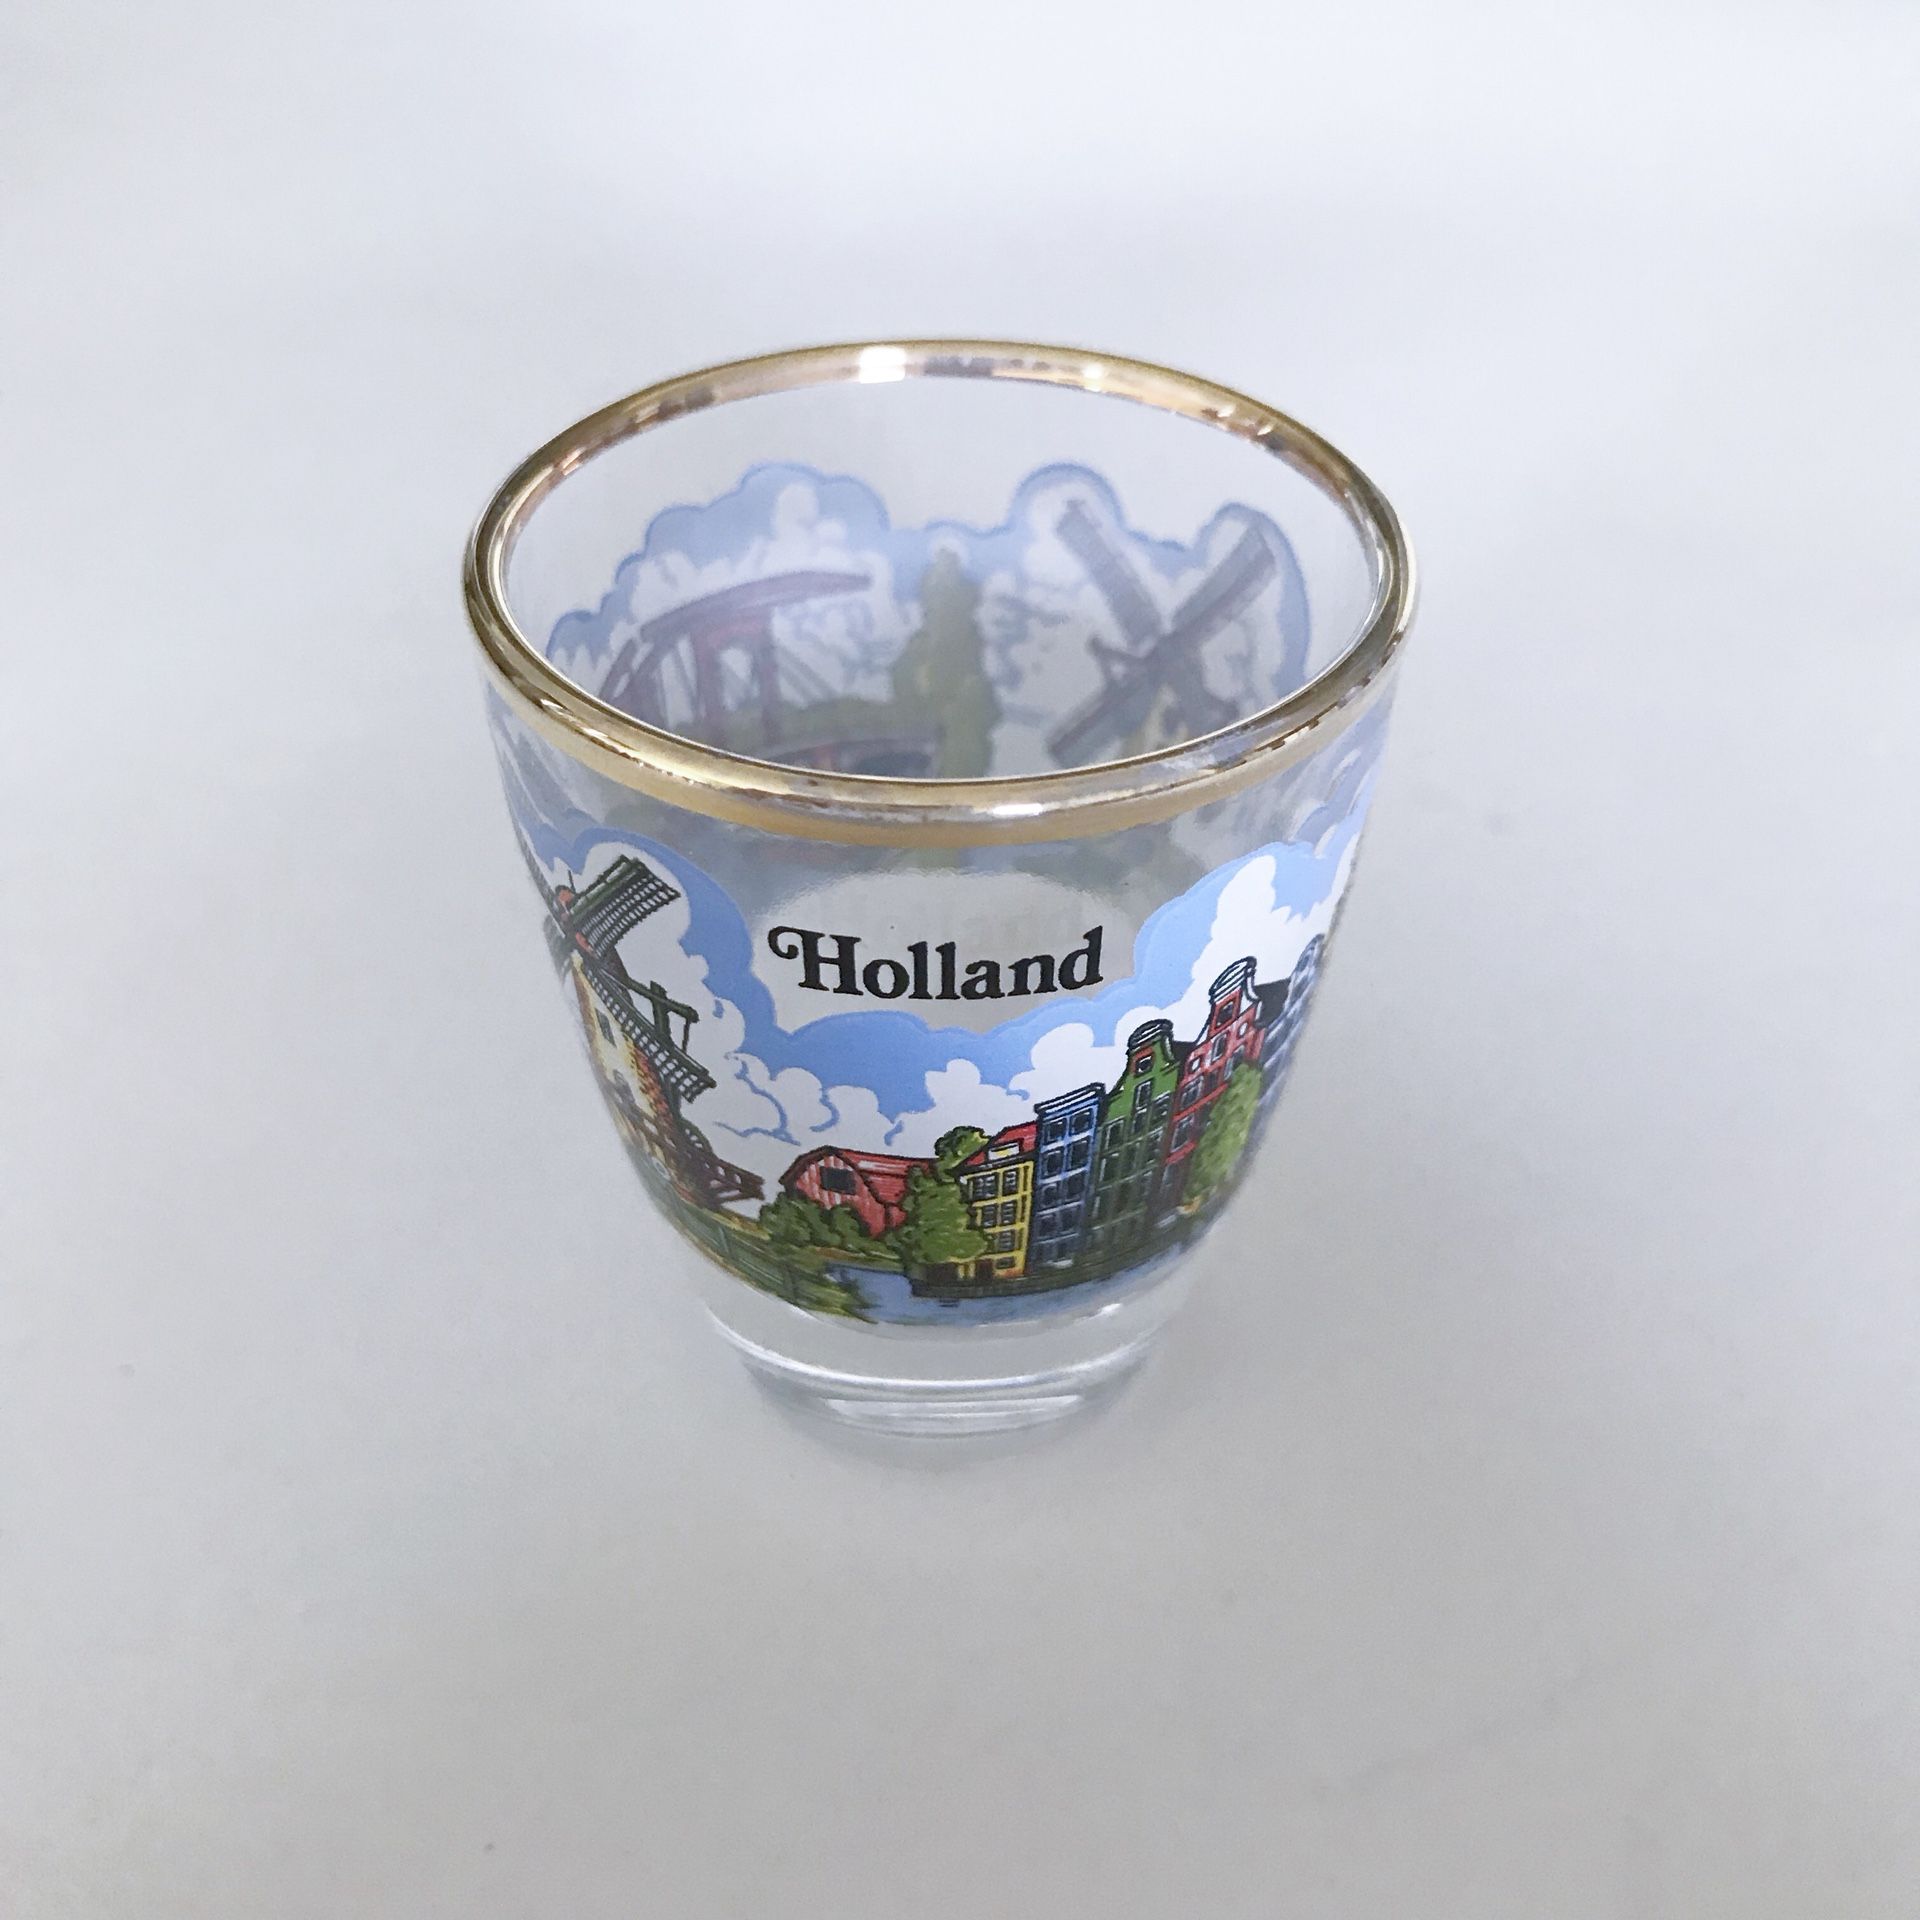 Holland Neatherlands collectible souvenir shot glass